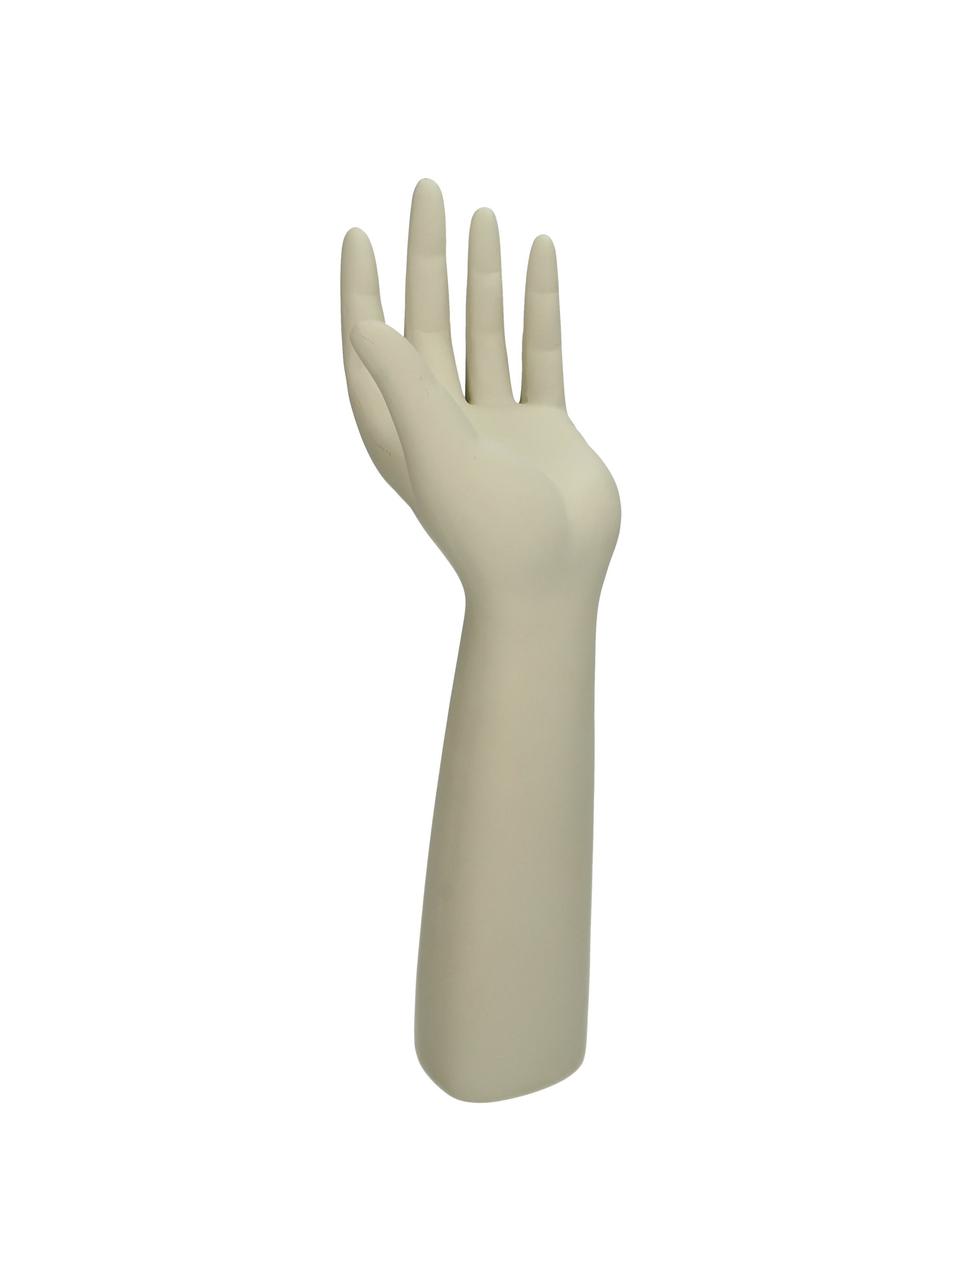 Deko-Objekt Hand, Polyresin, Beige, B 12 x H 38 cm